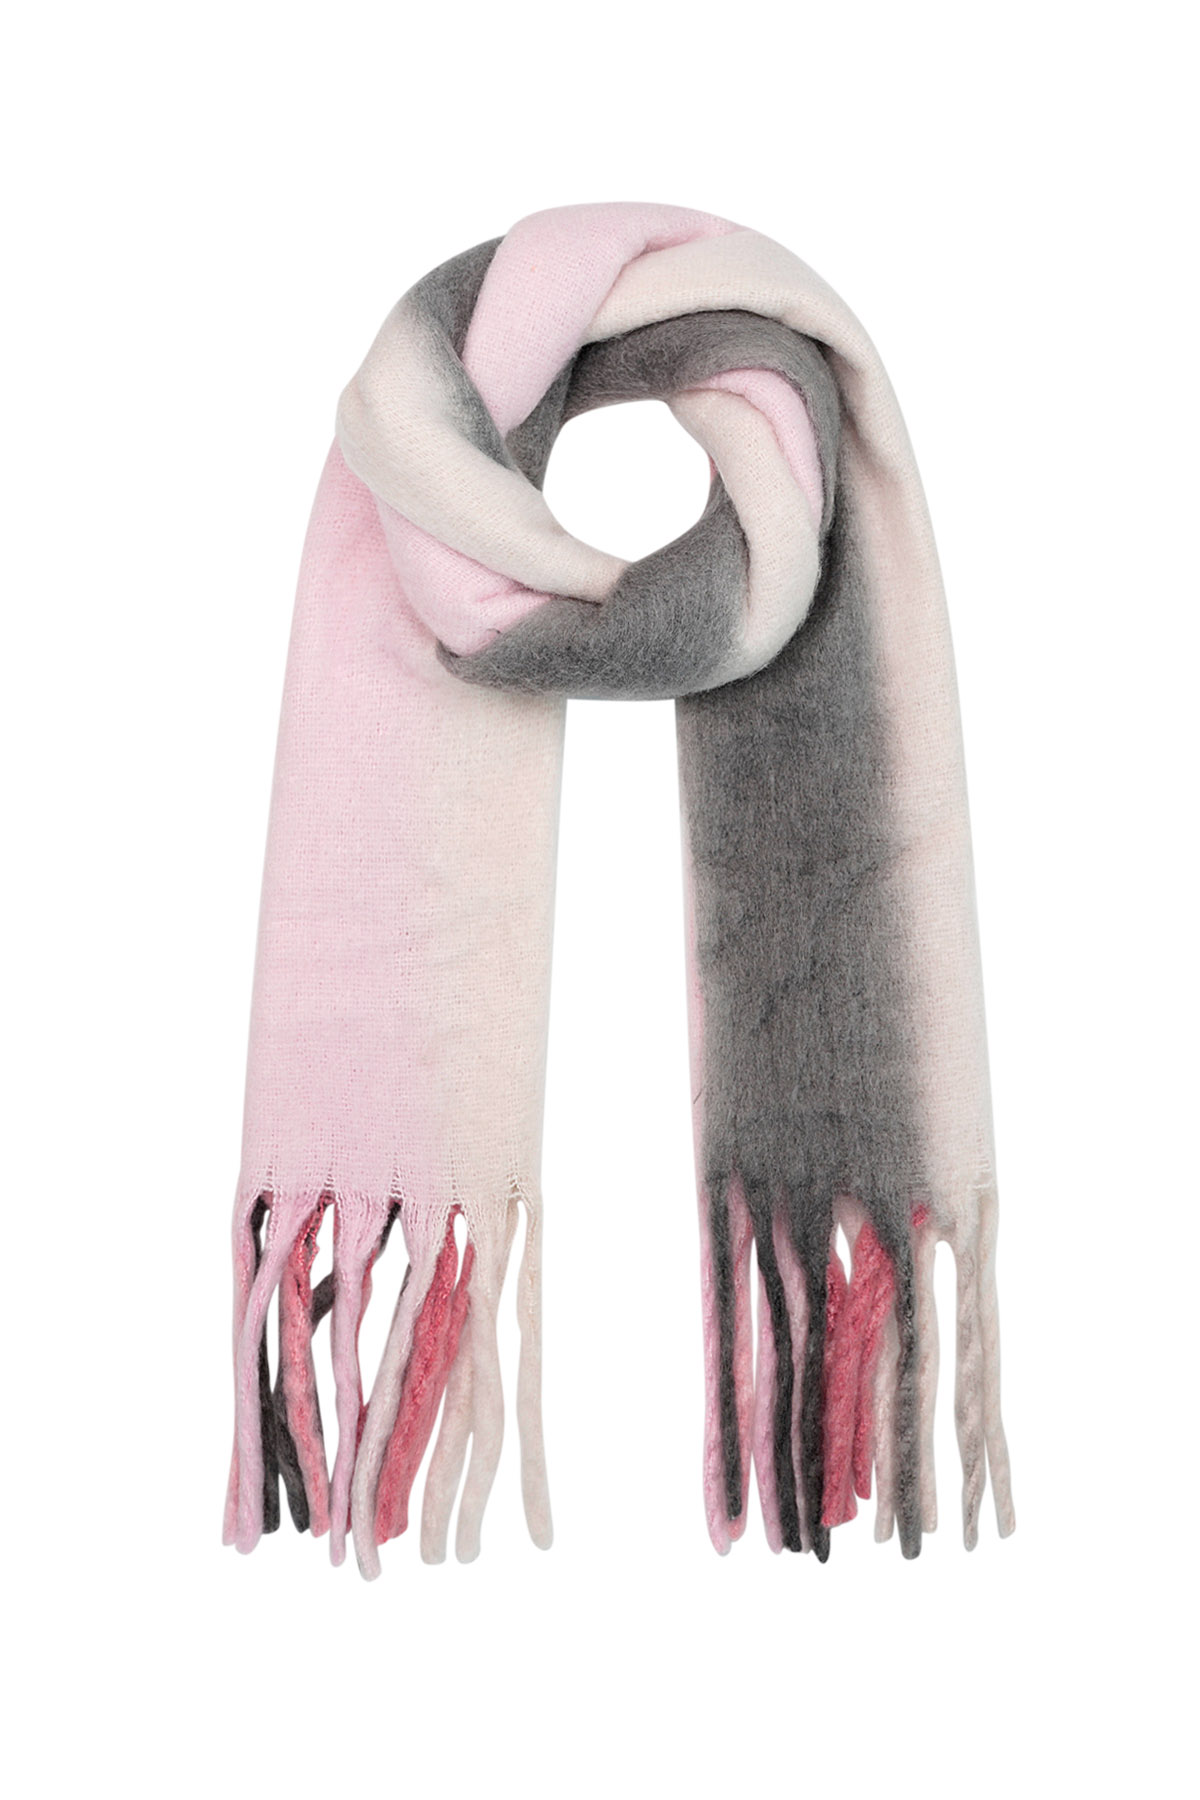 Winterschal Ombréfarben rosa/grau Polyester